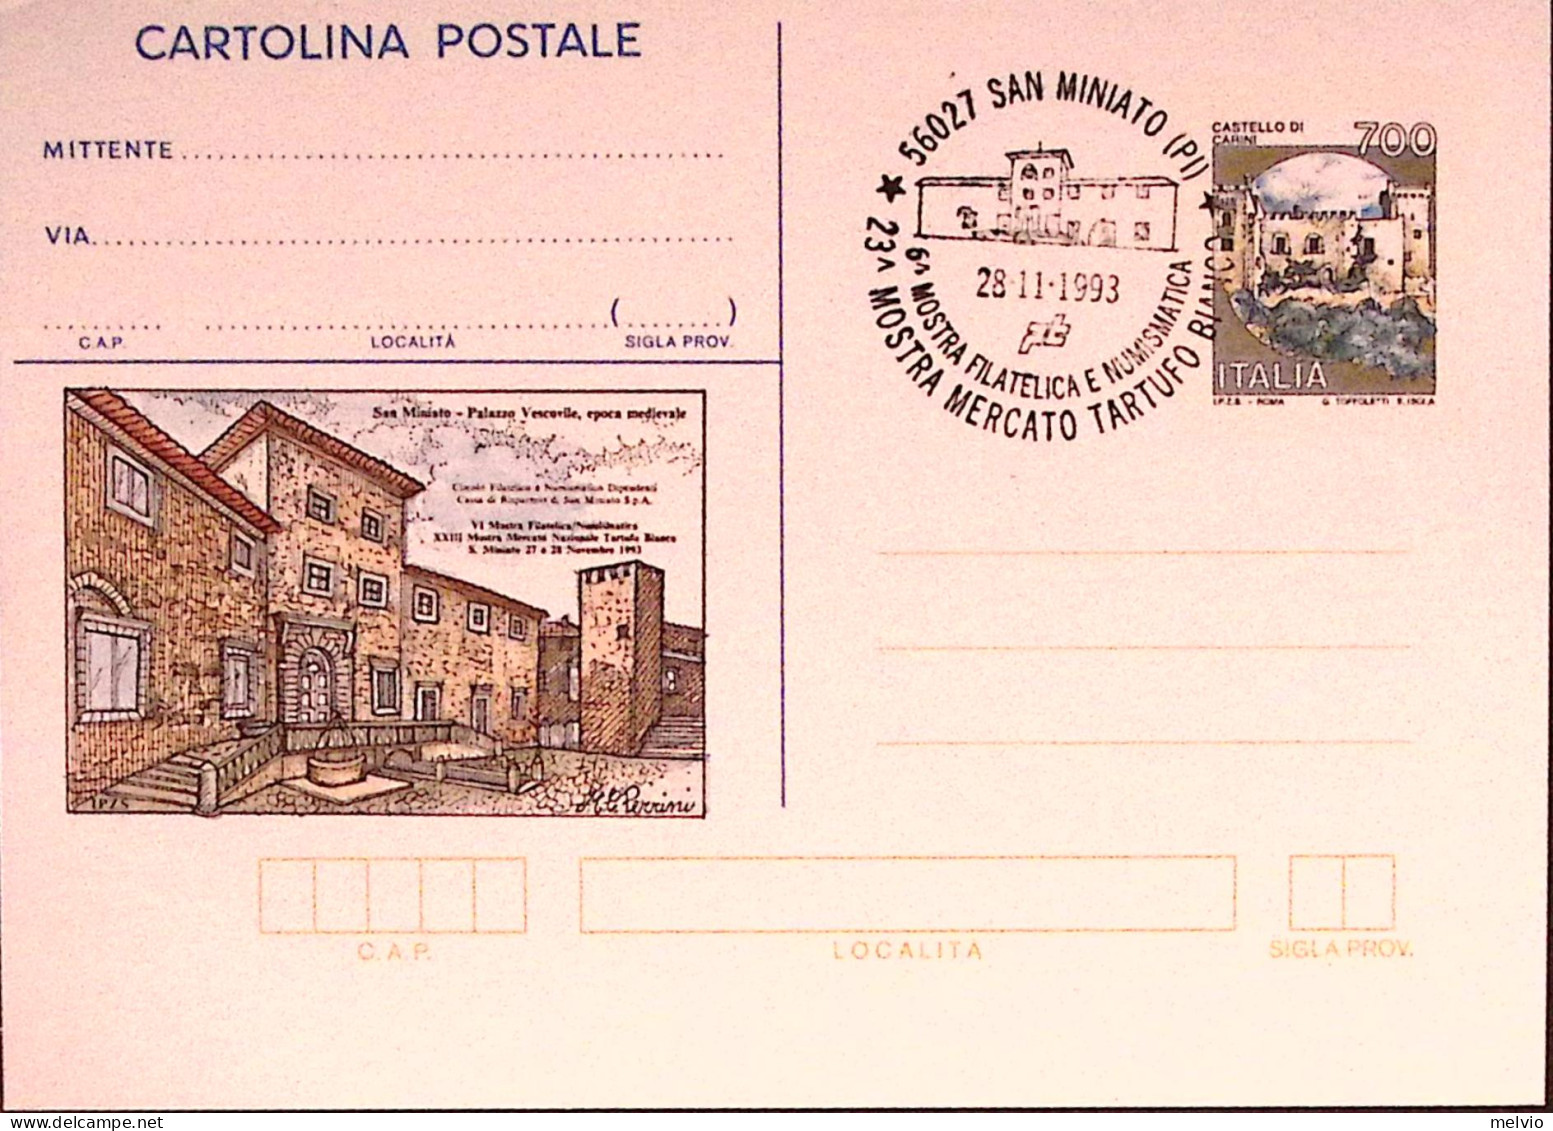 1993-SAN MINIATO Cartolina Postale IPZS Lire 700 Con Ann Spec - Entiers Postaux